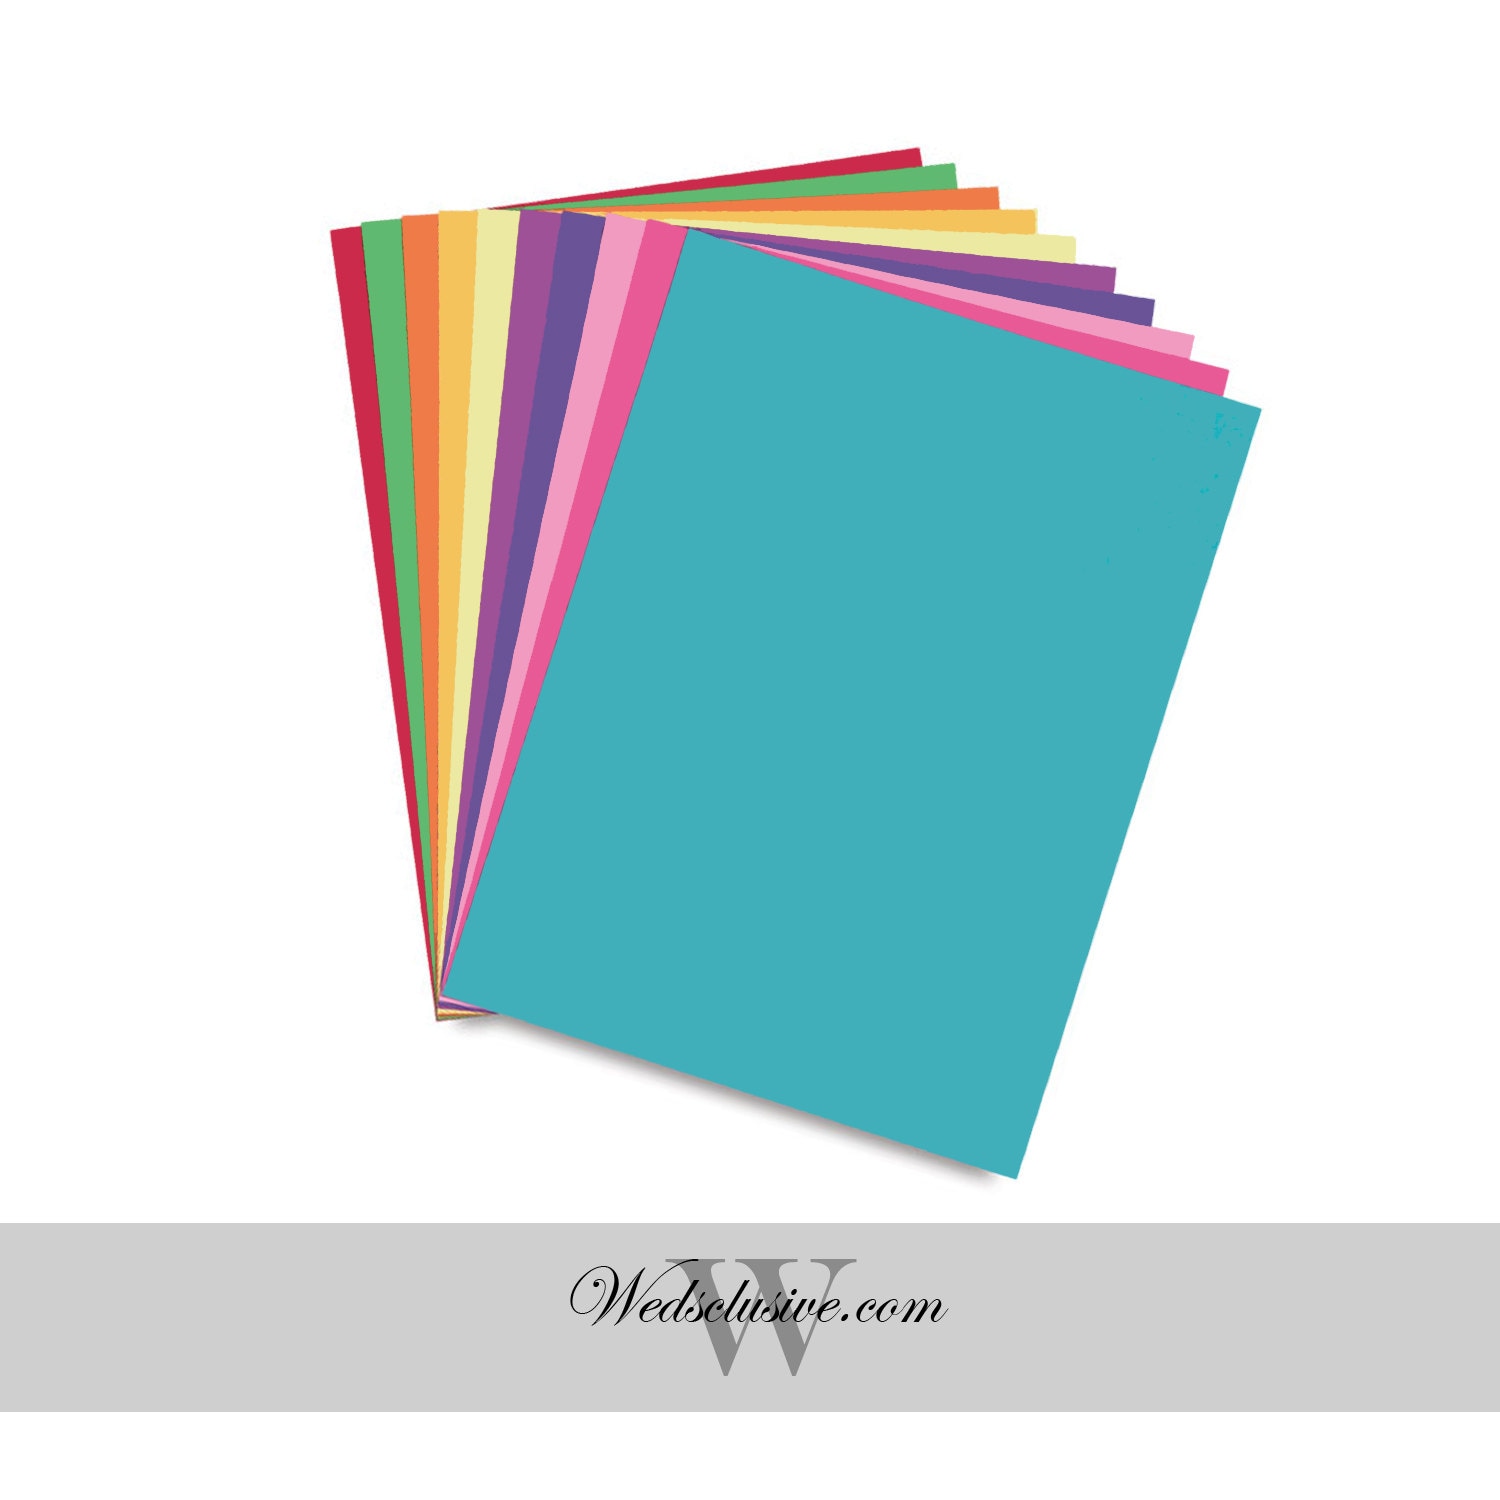 300g Paper Cardstock Colorful Assortment 24 Colors for Arts and Crafts -  China Color Cardstock, Color Construction Paper